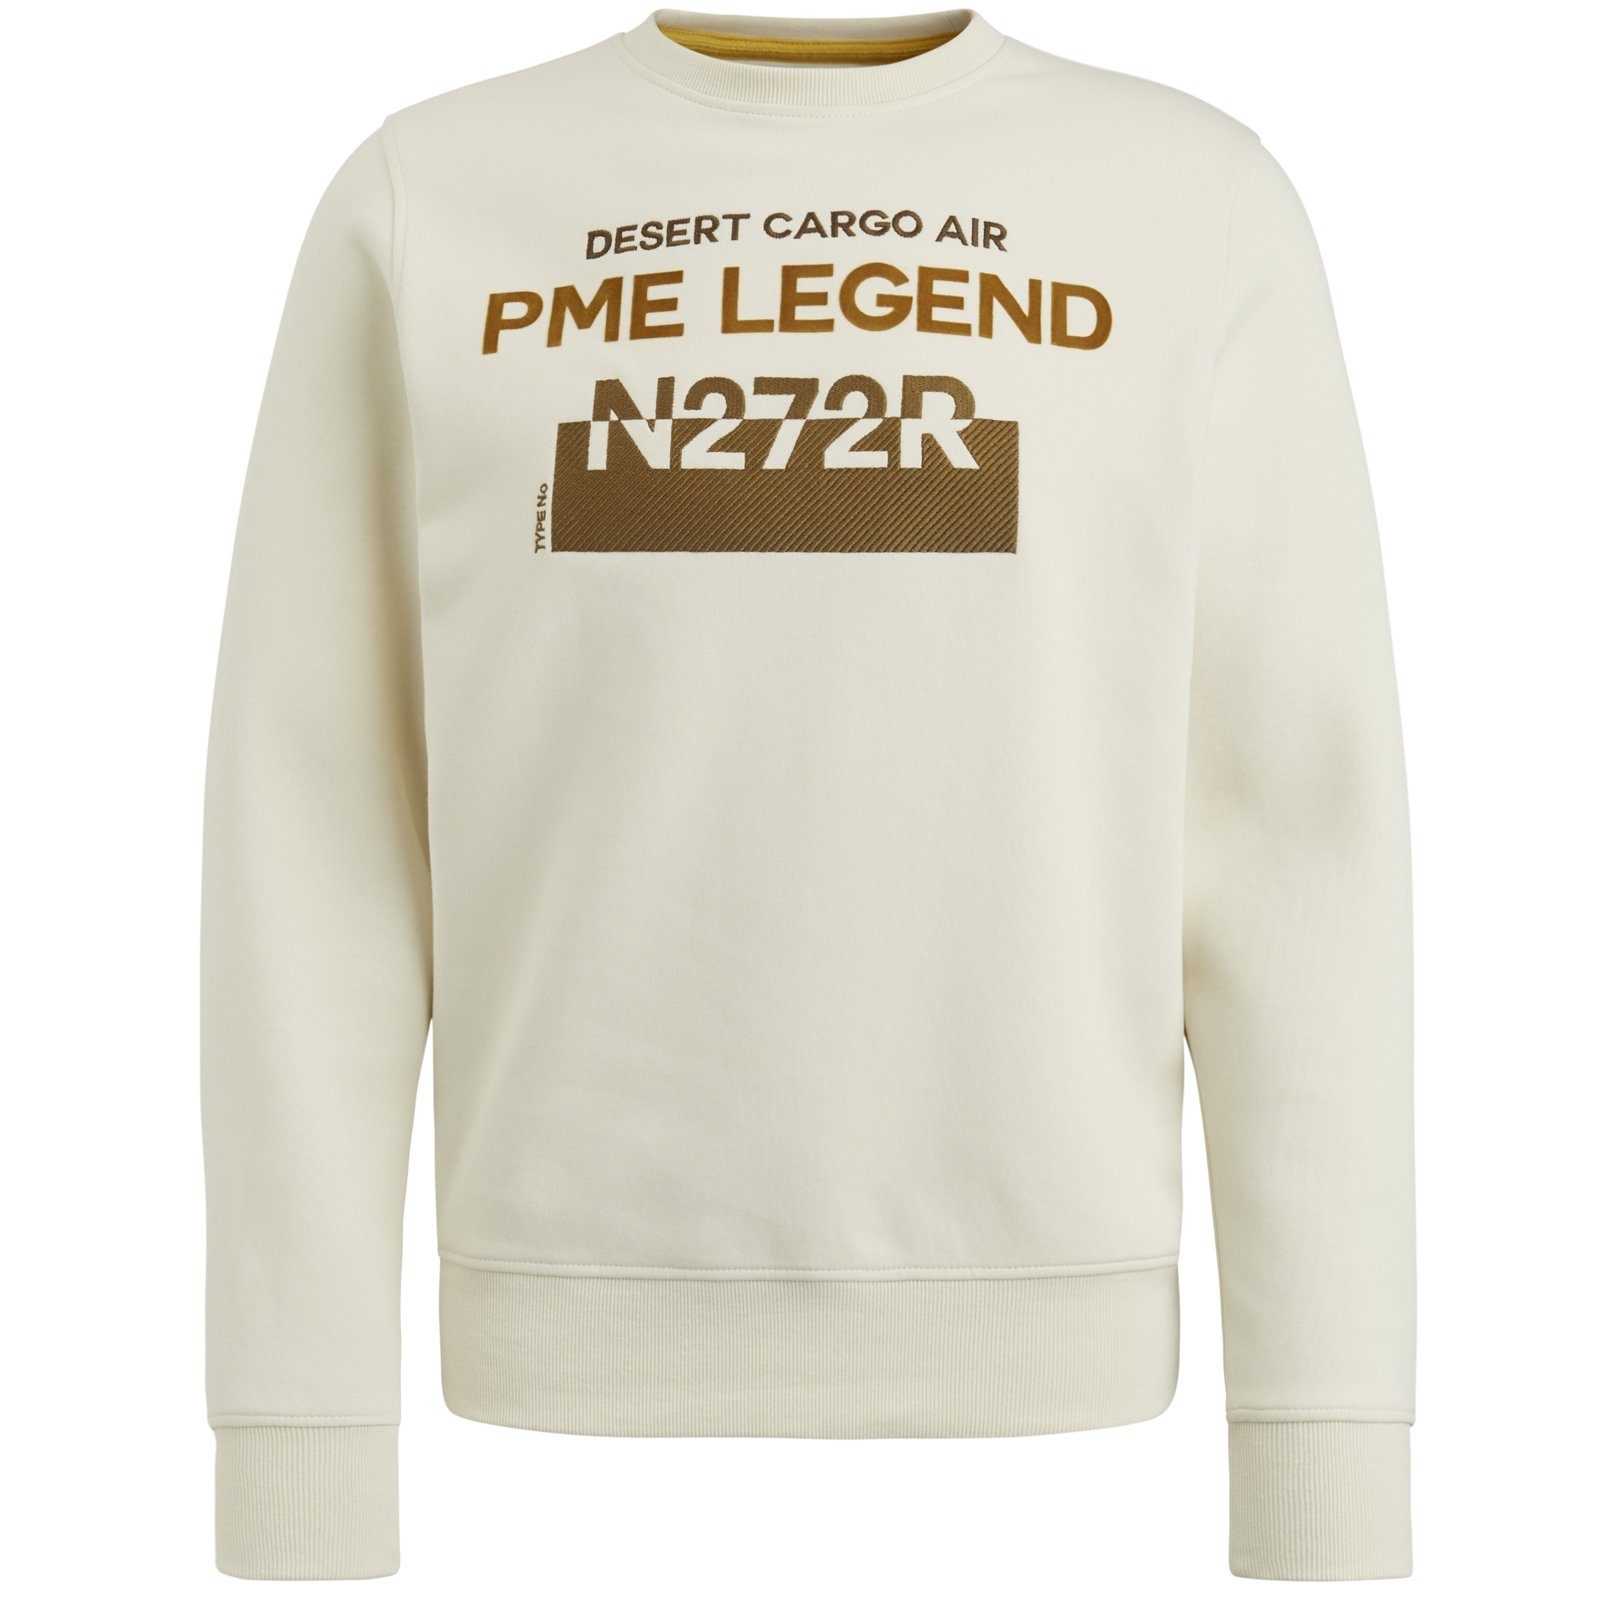 PME interl Crewneck soft LEGEND Sweatshirt